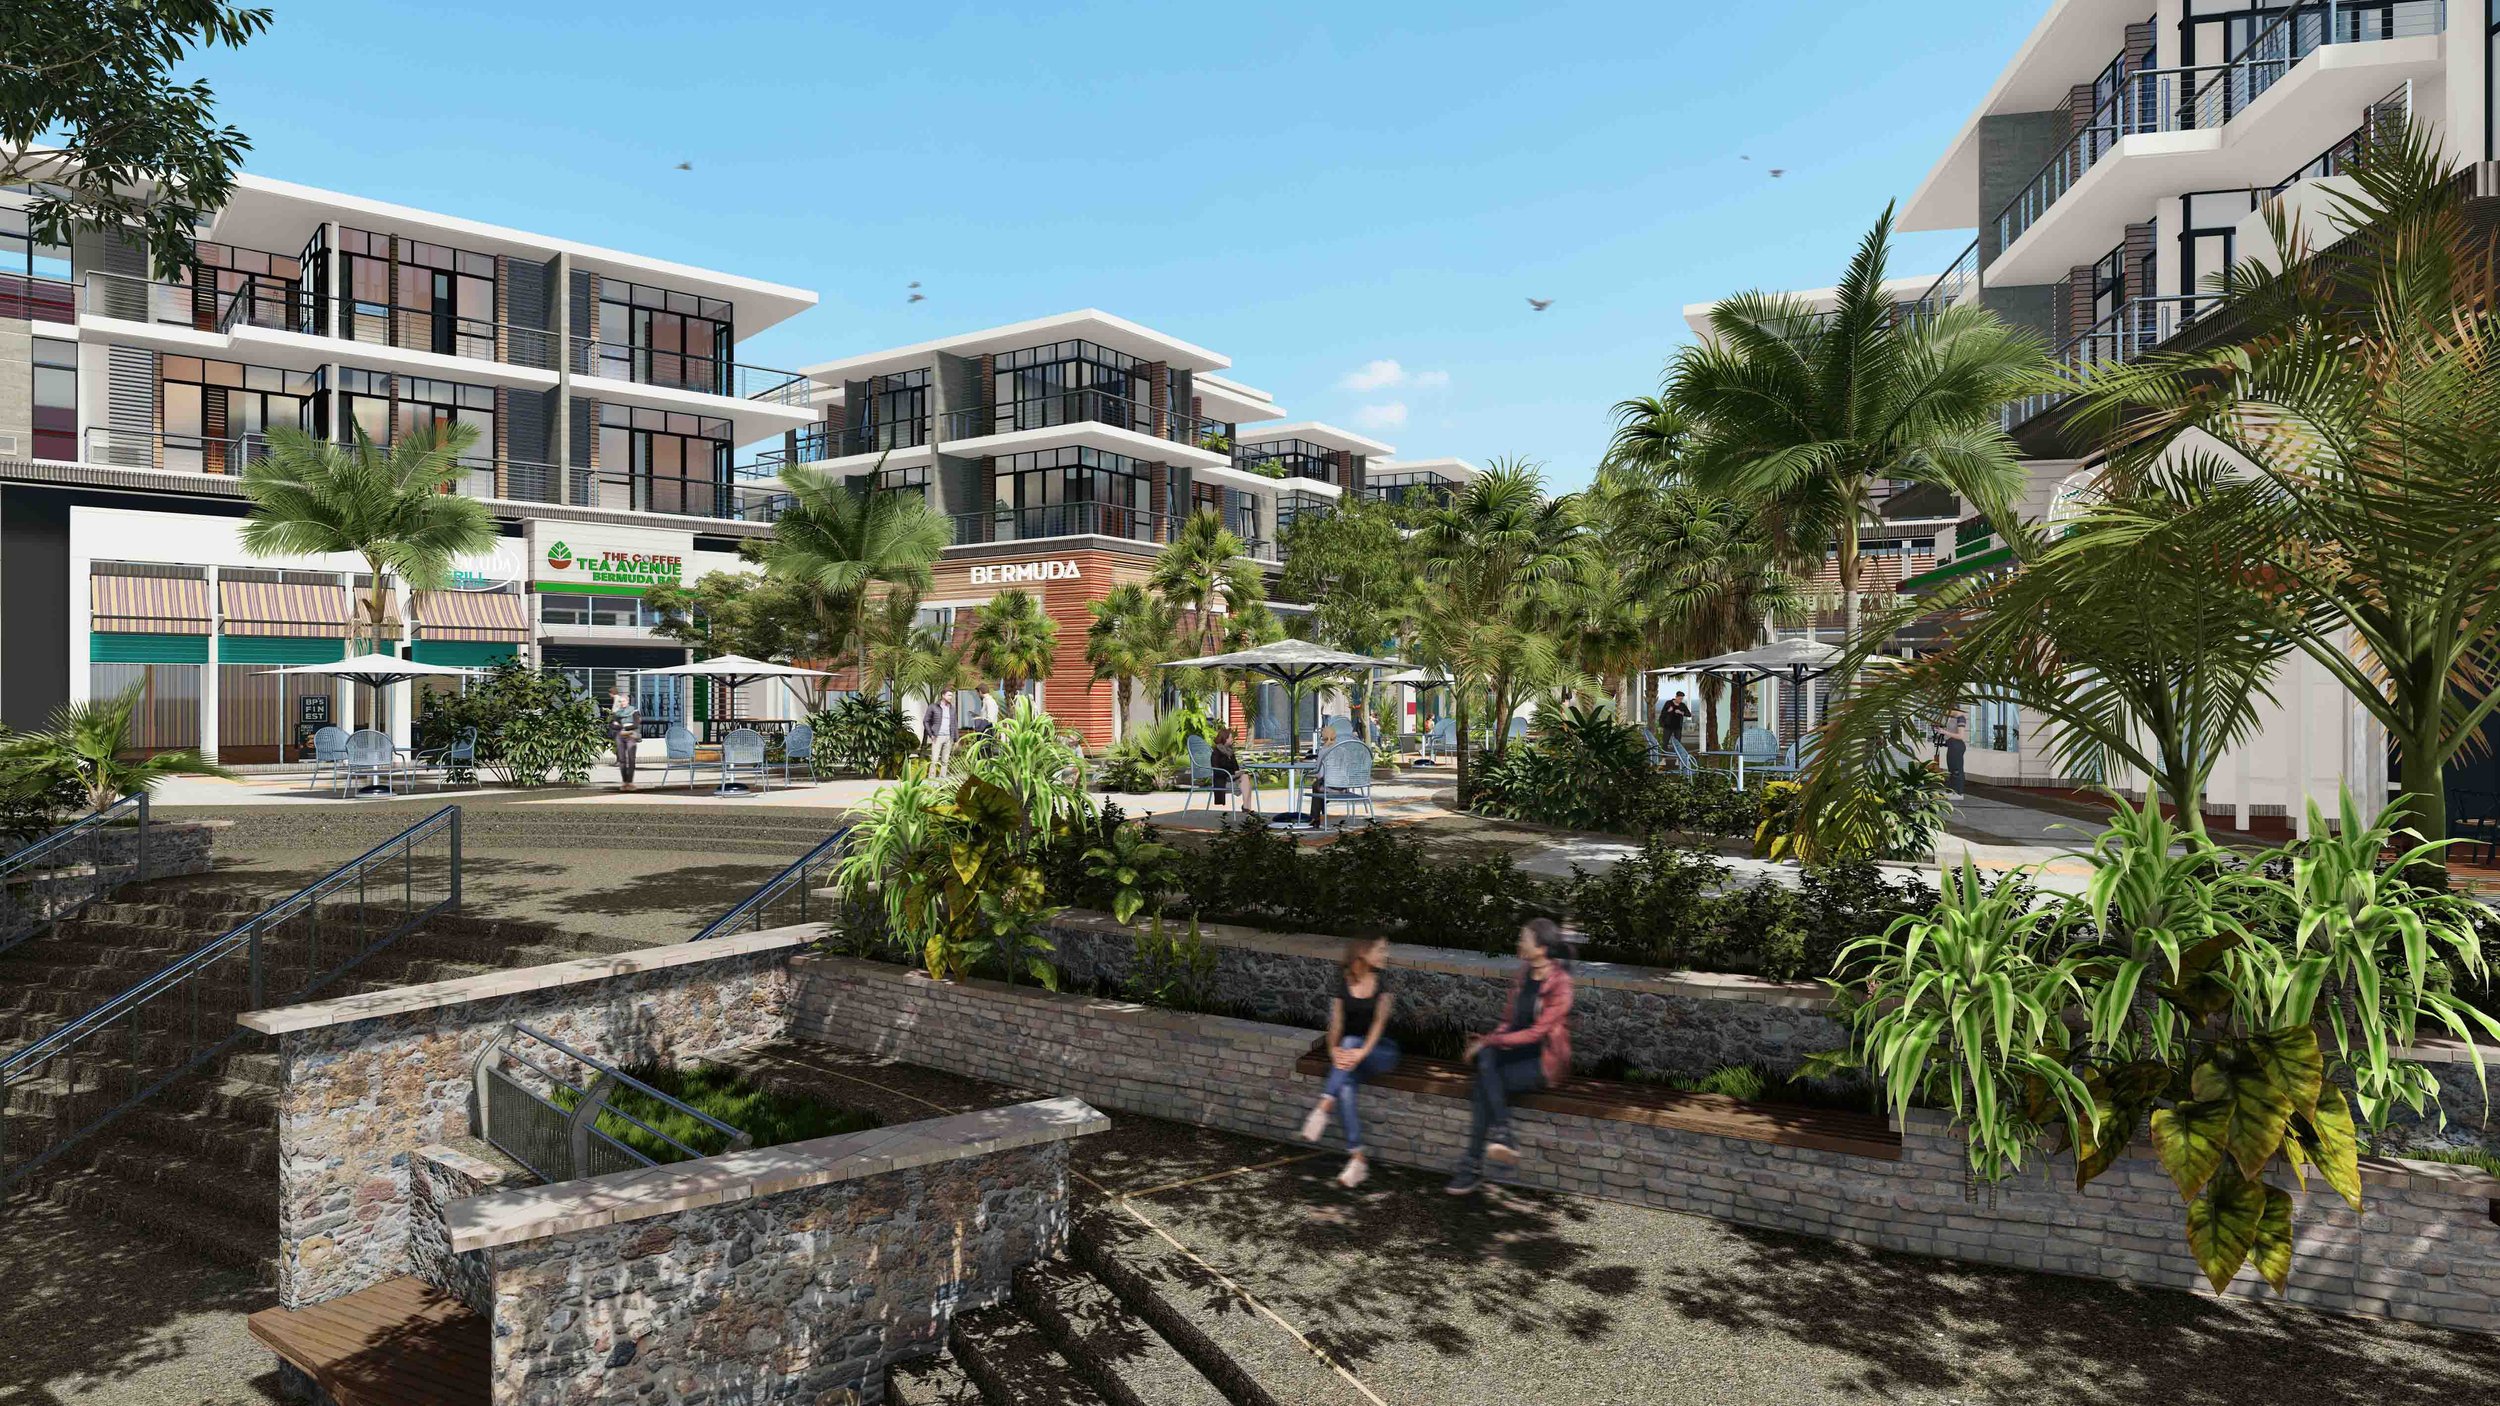  Bermuda Redevelopment project conceptual render. 